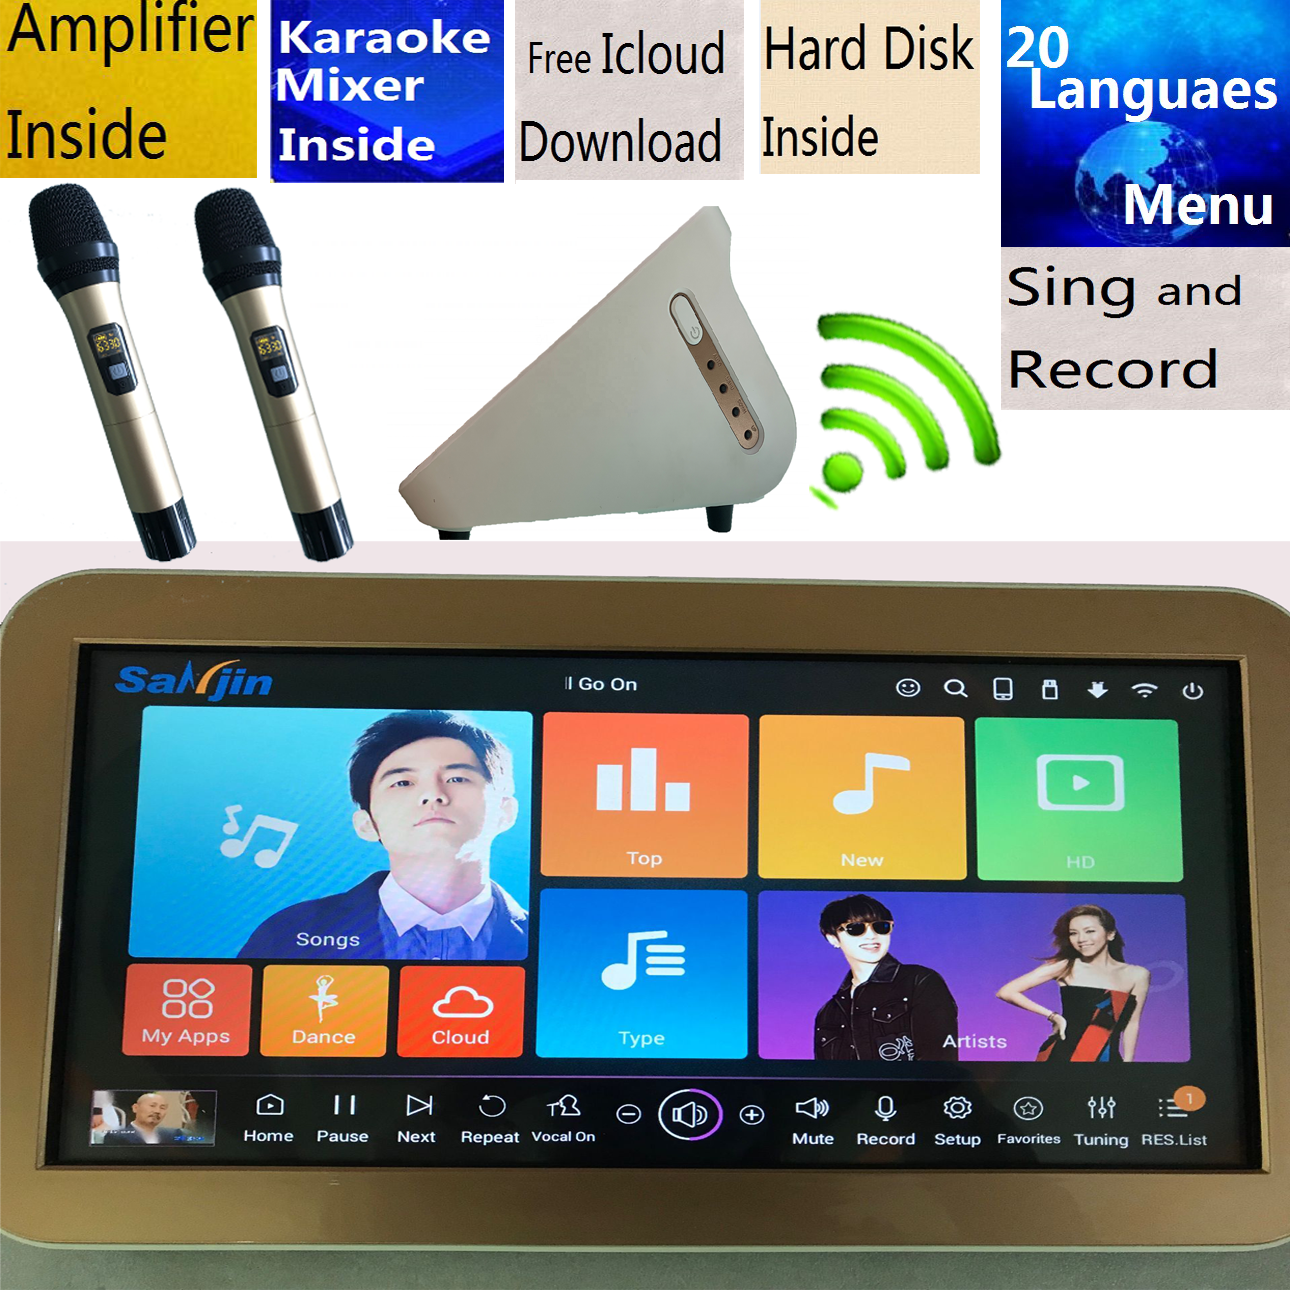 karaoke Player Jukebox Machine+Amplifier Mixer+2Wreless Karaoke Microphones +15.6"touch screen HMDI1080P KTV/MTV